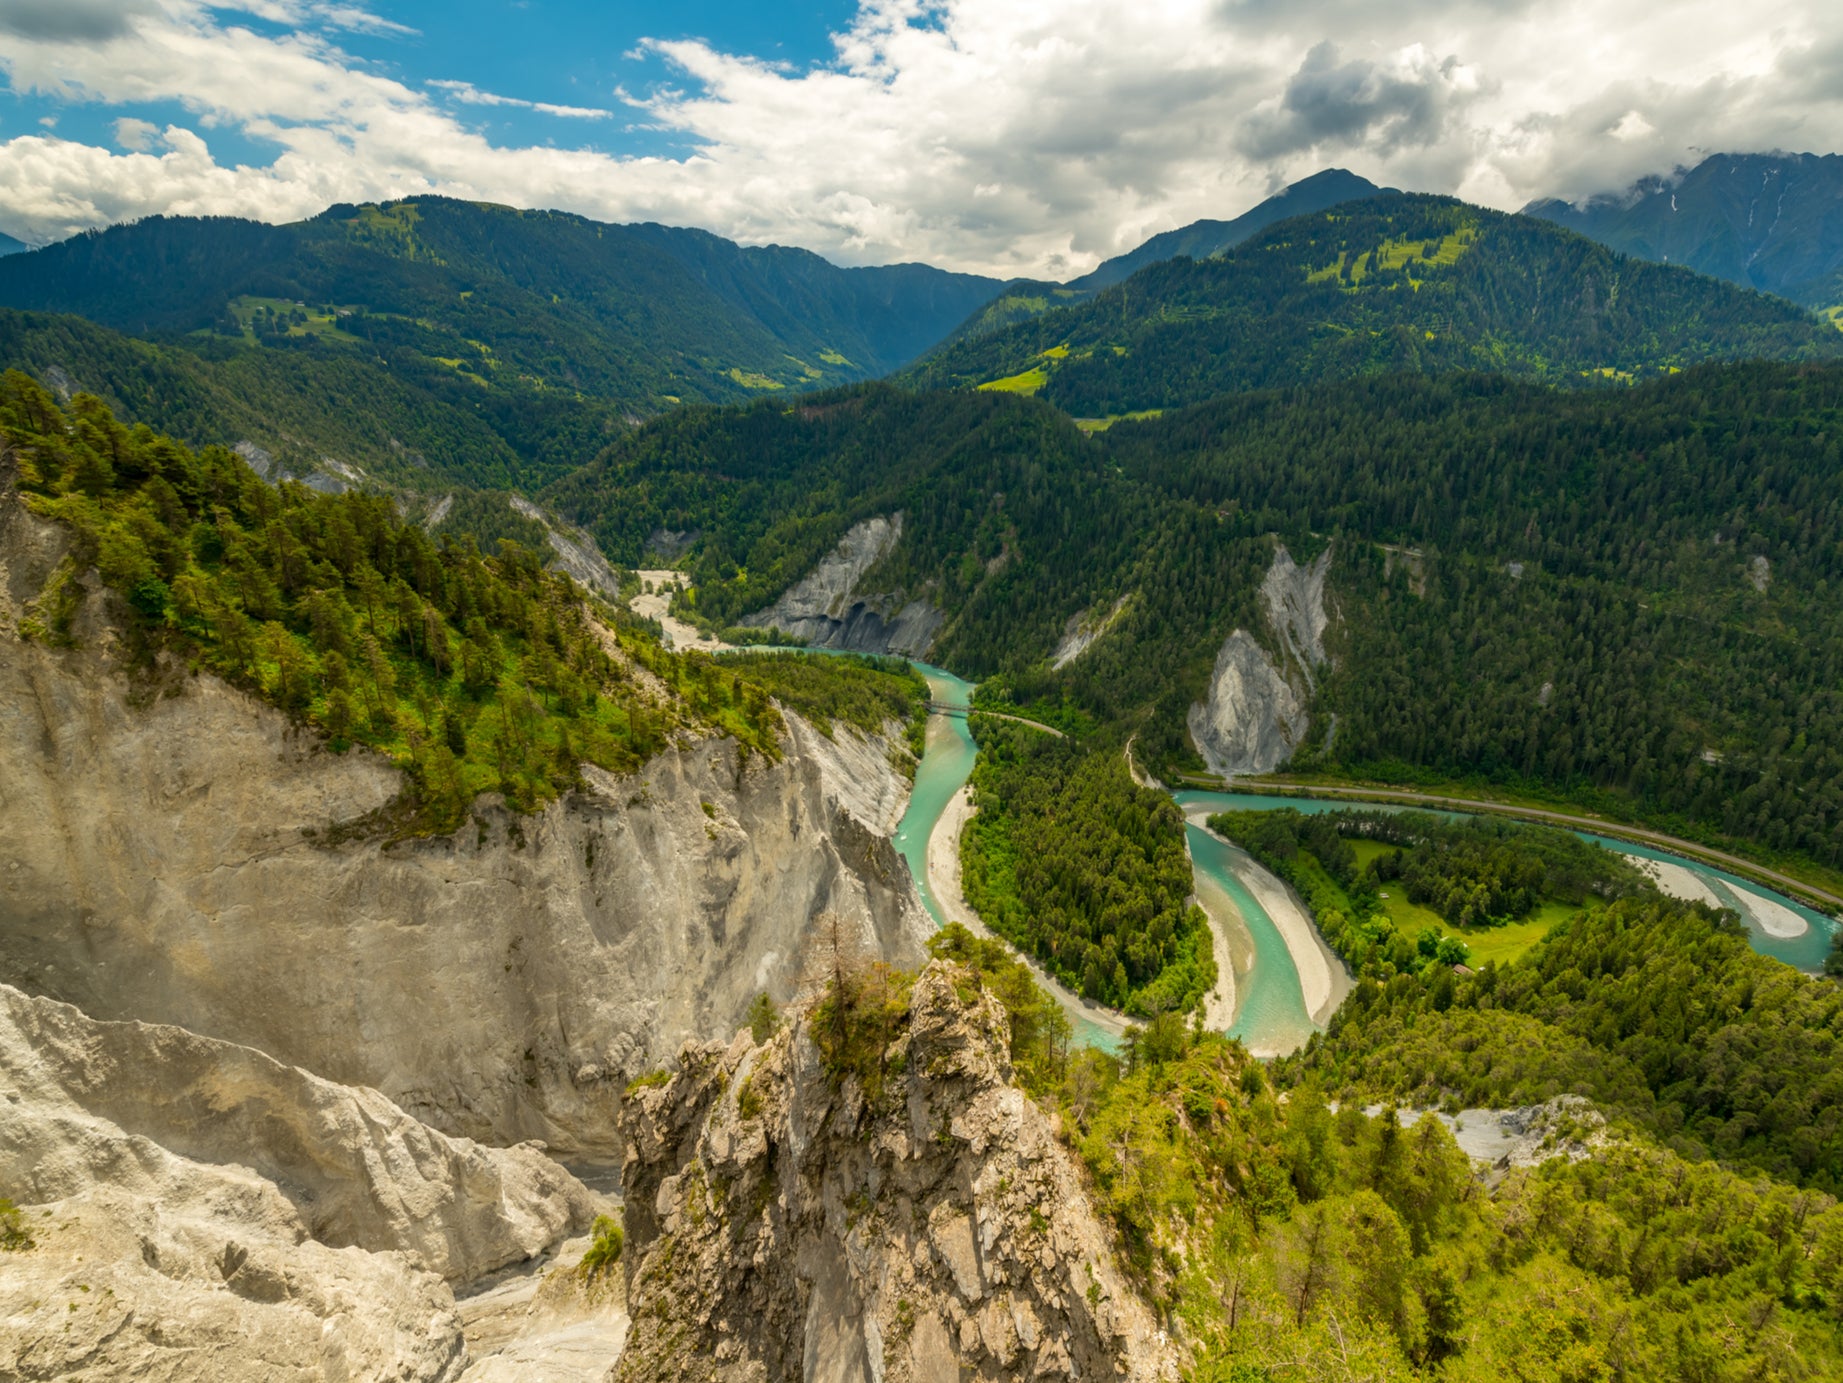 The impressive turquoise-ribboned Rhine Gorge